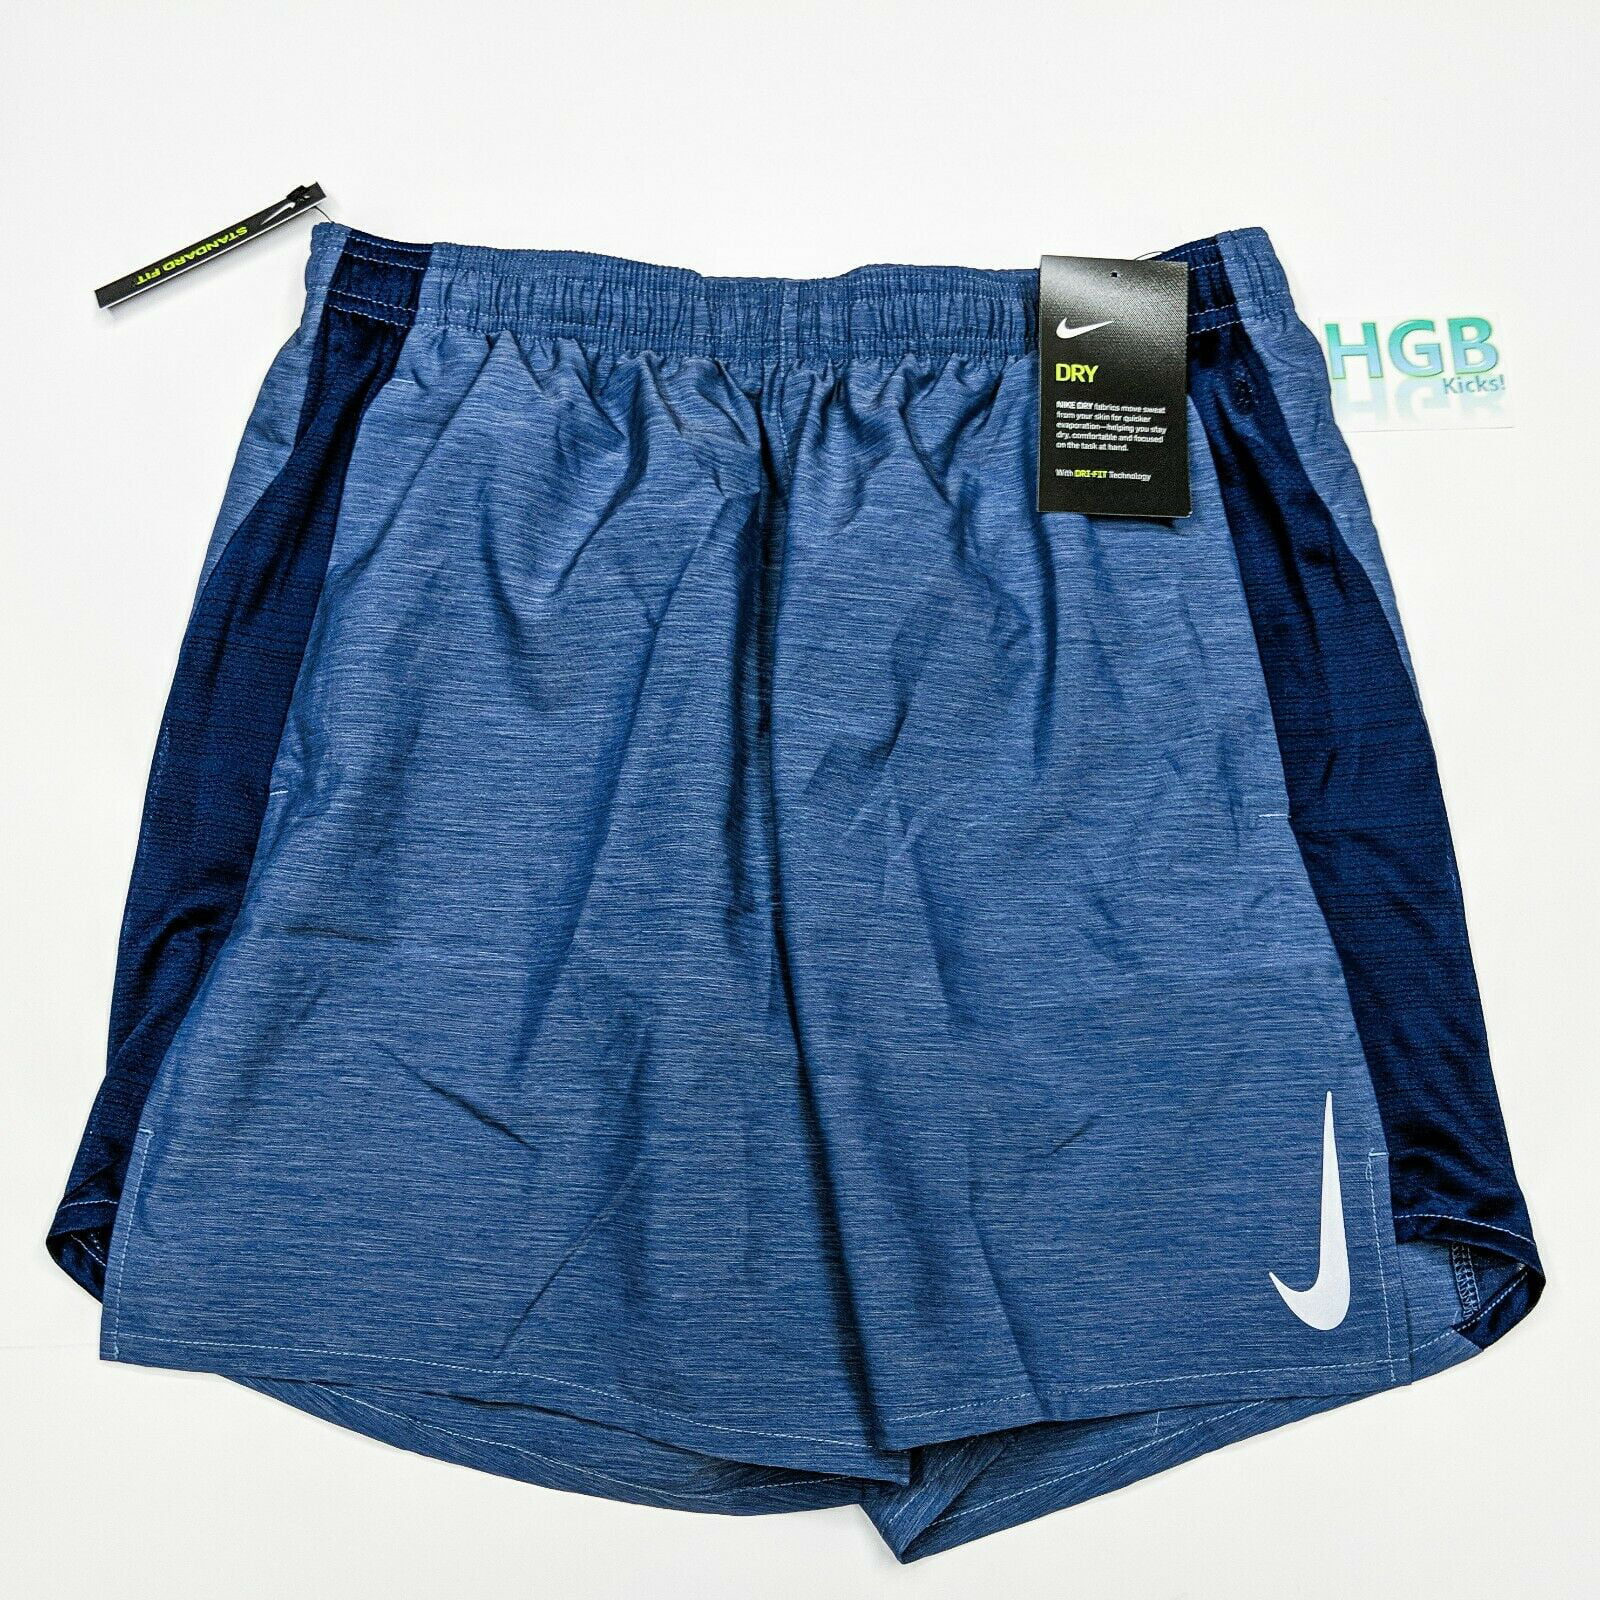 Nike Dry Shorts Men's Lined Blue AJ7687-493 - Walmart.com